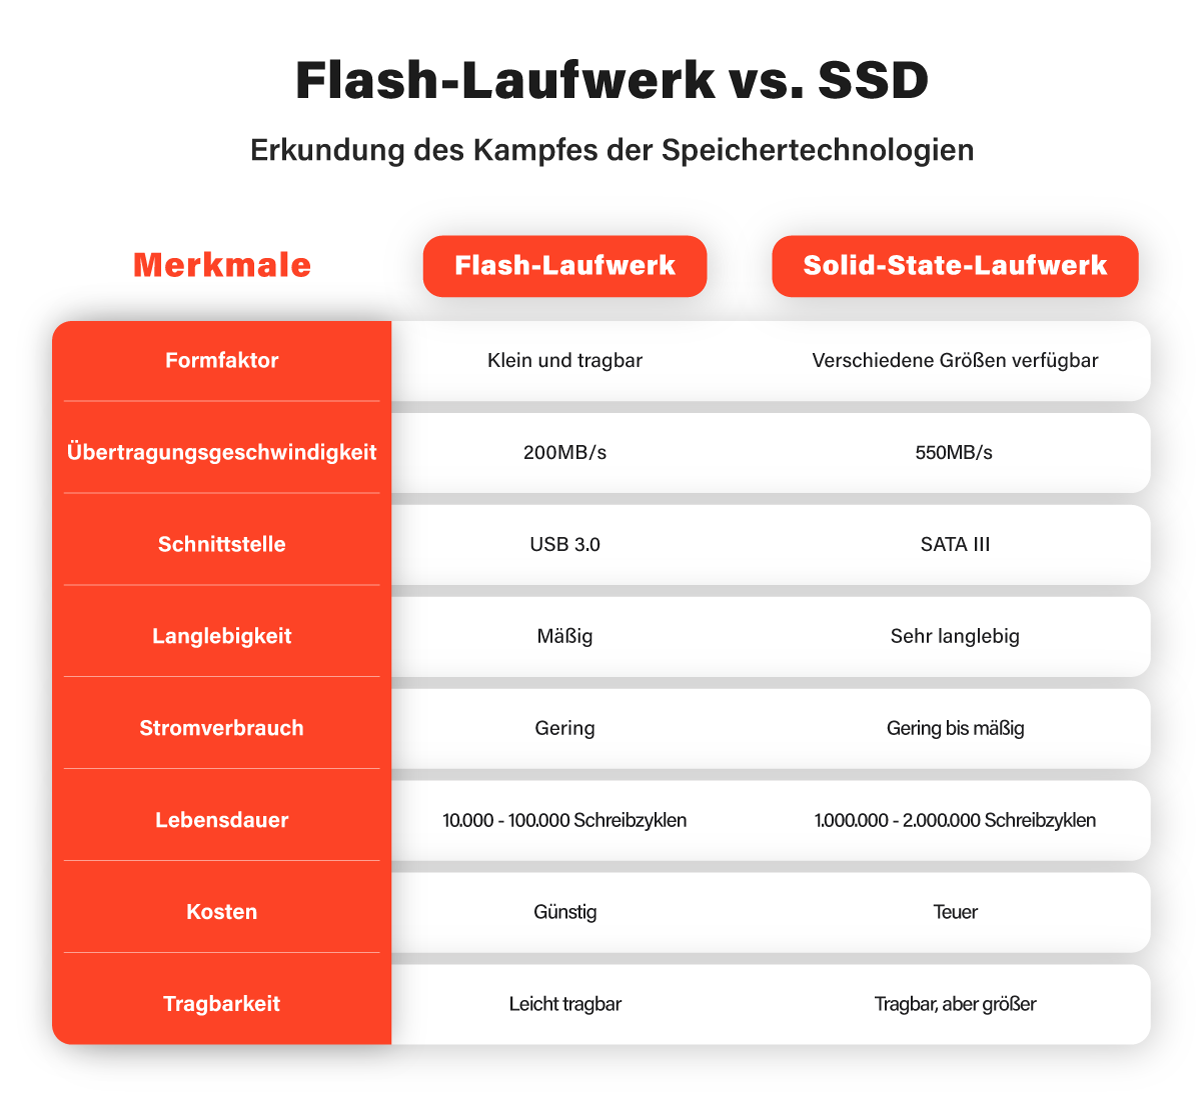 Flash-Laufwerk vs. SSD